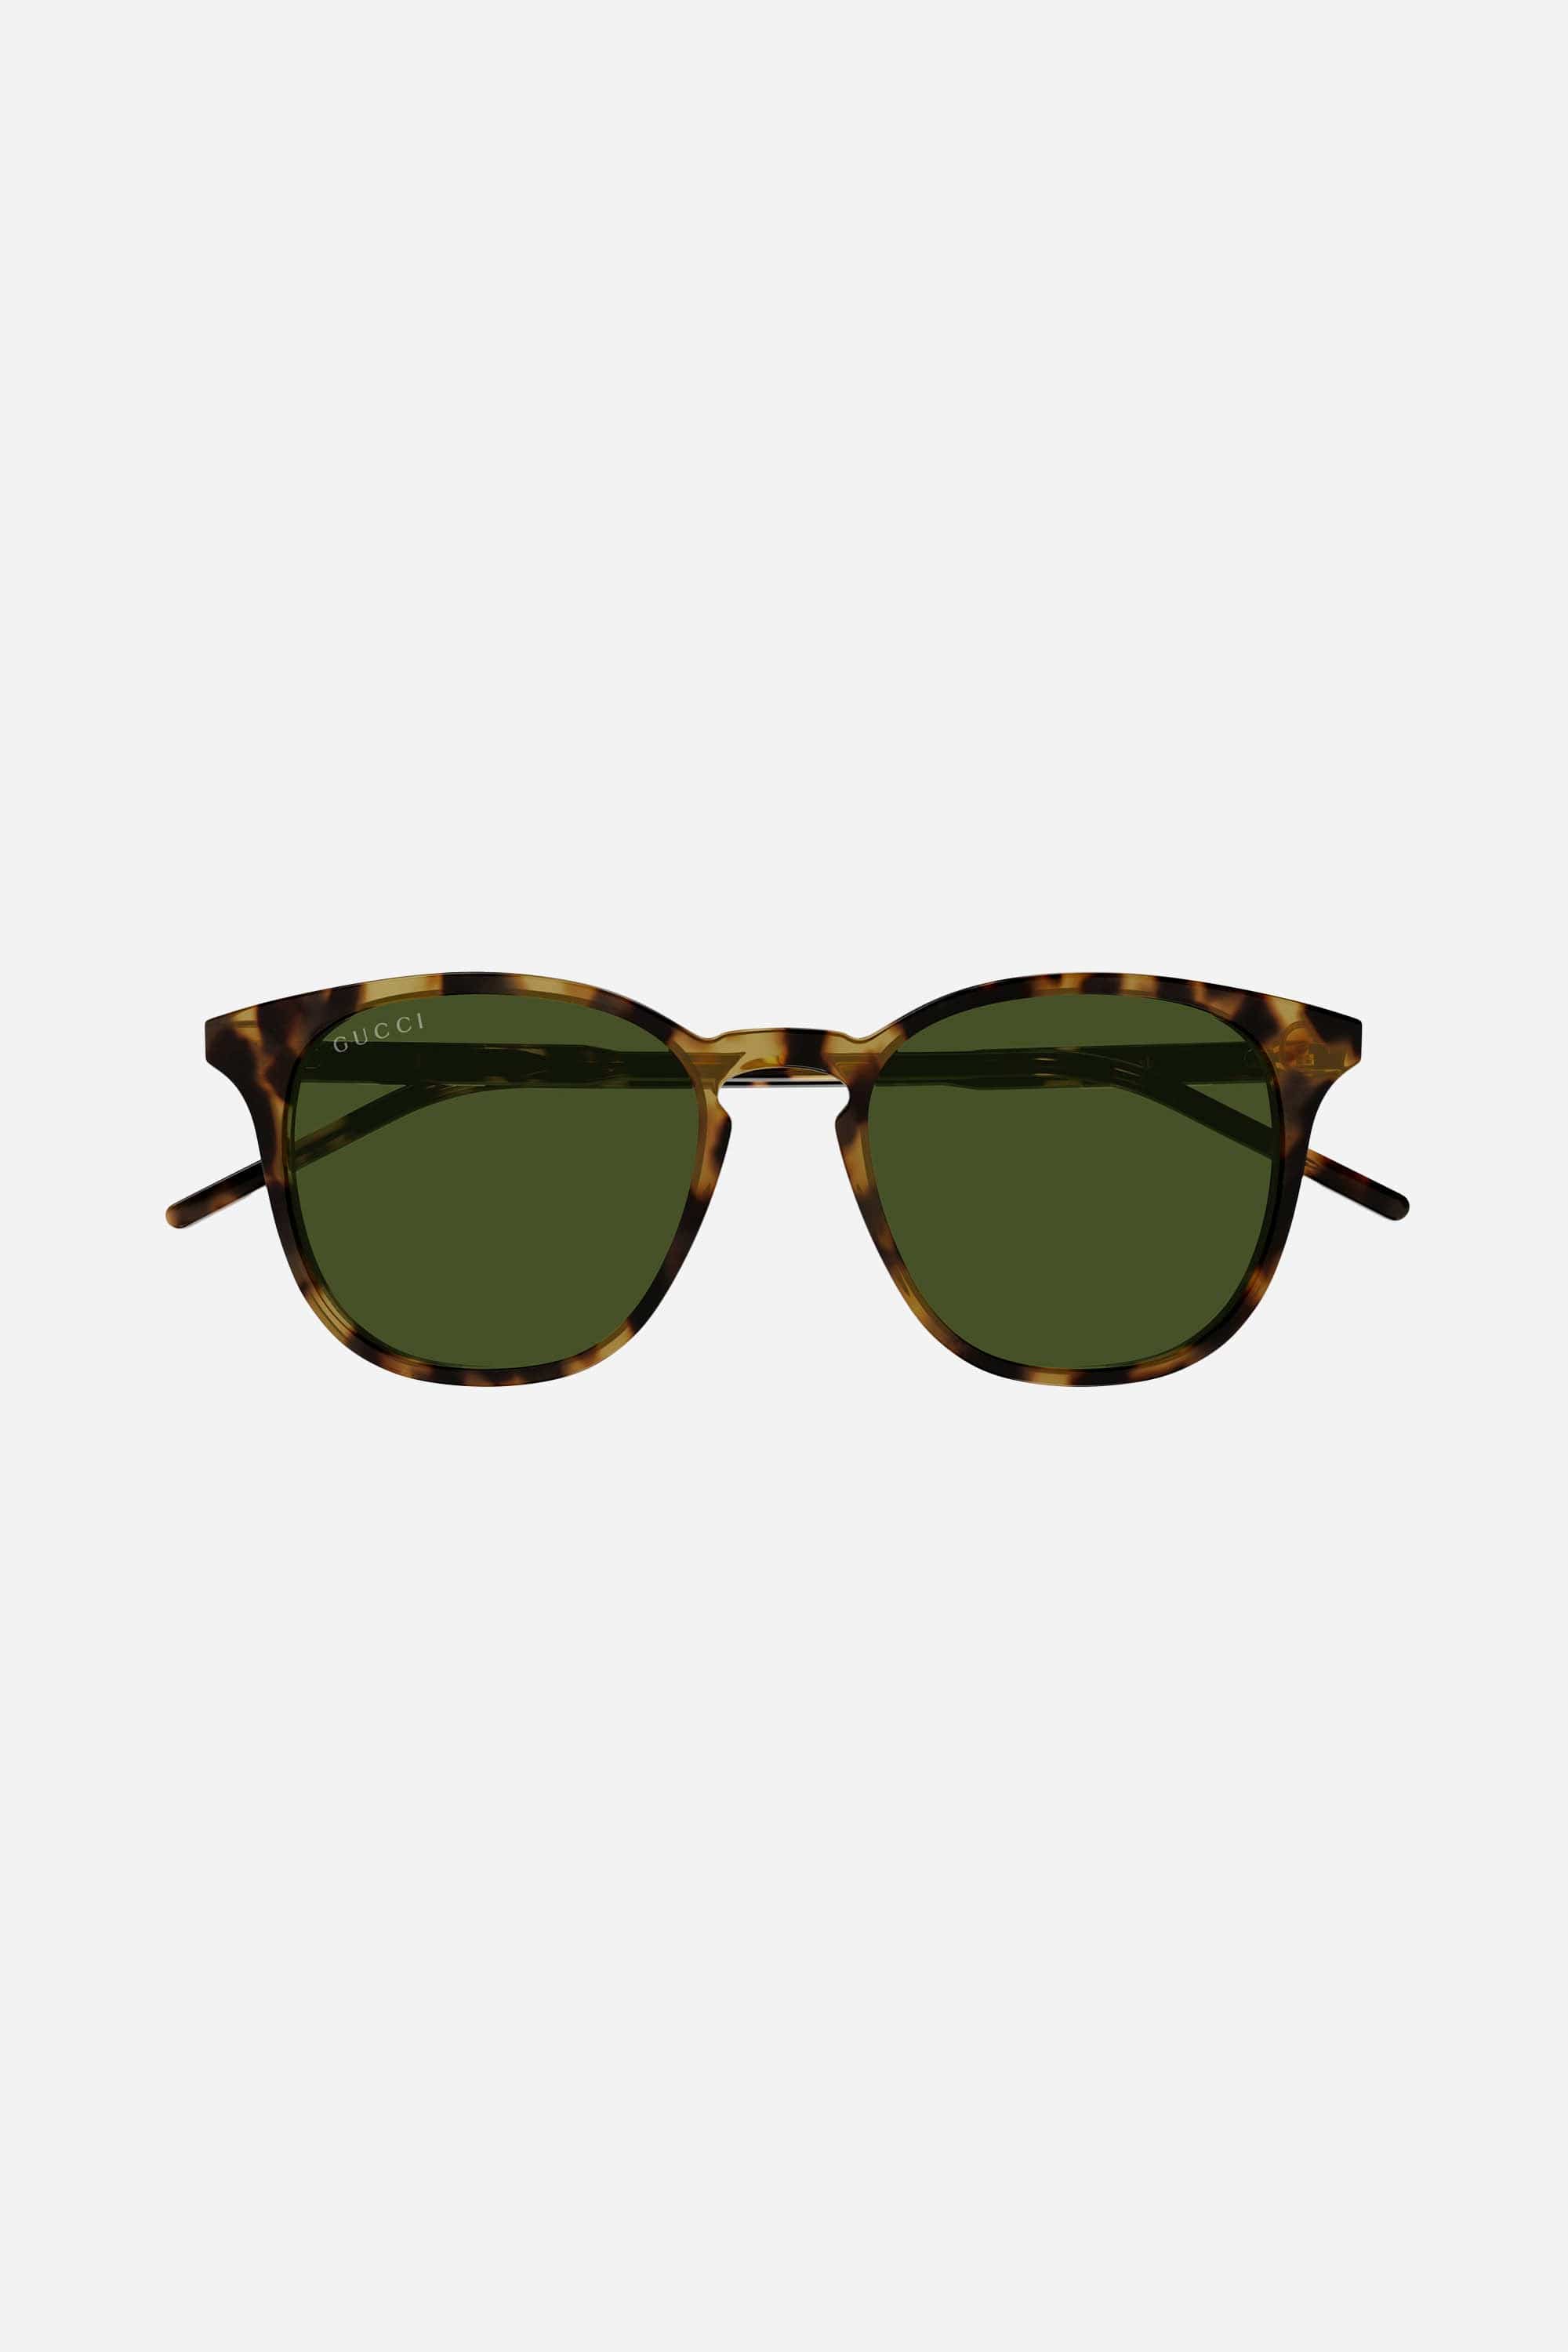 Gucci spotted havana men sunglasses - Eyewear Club